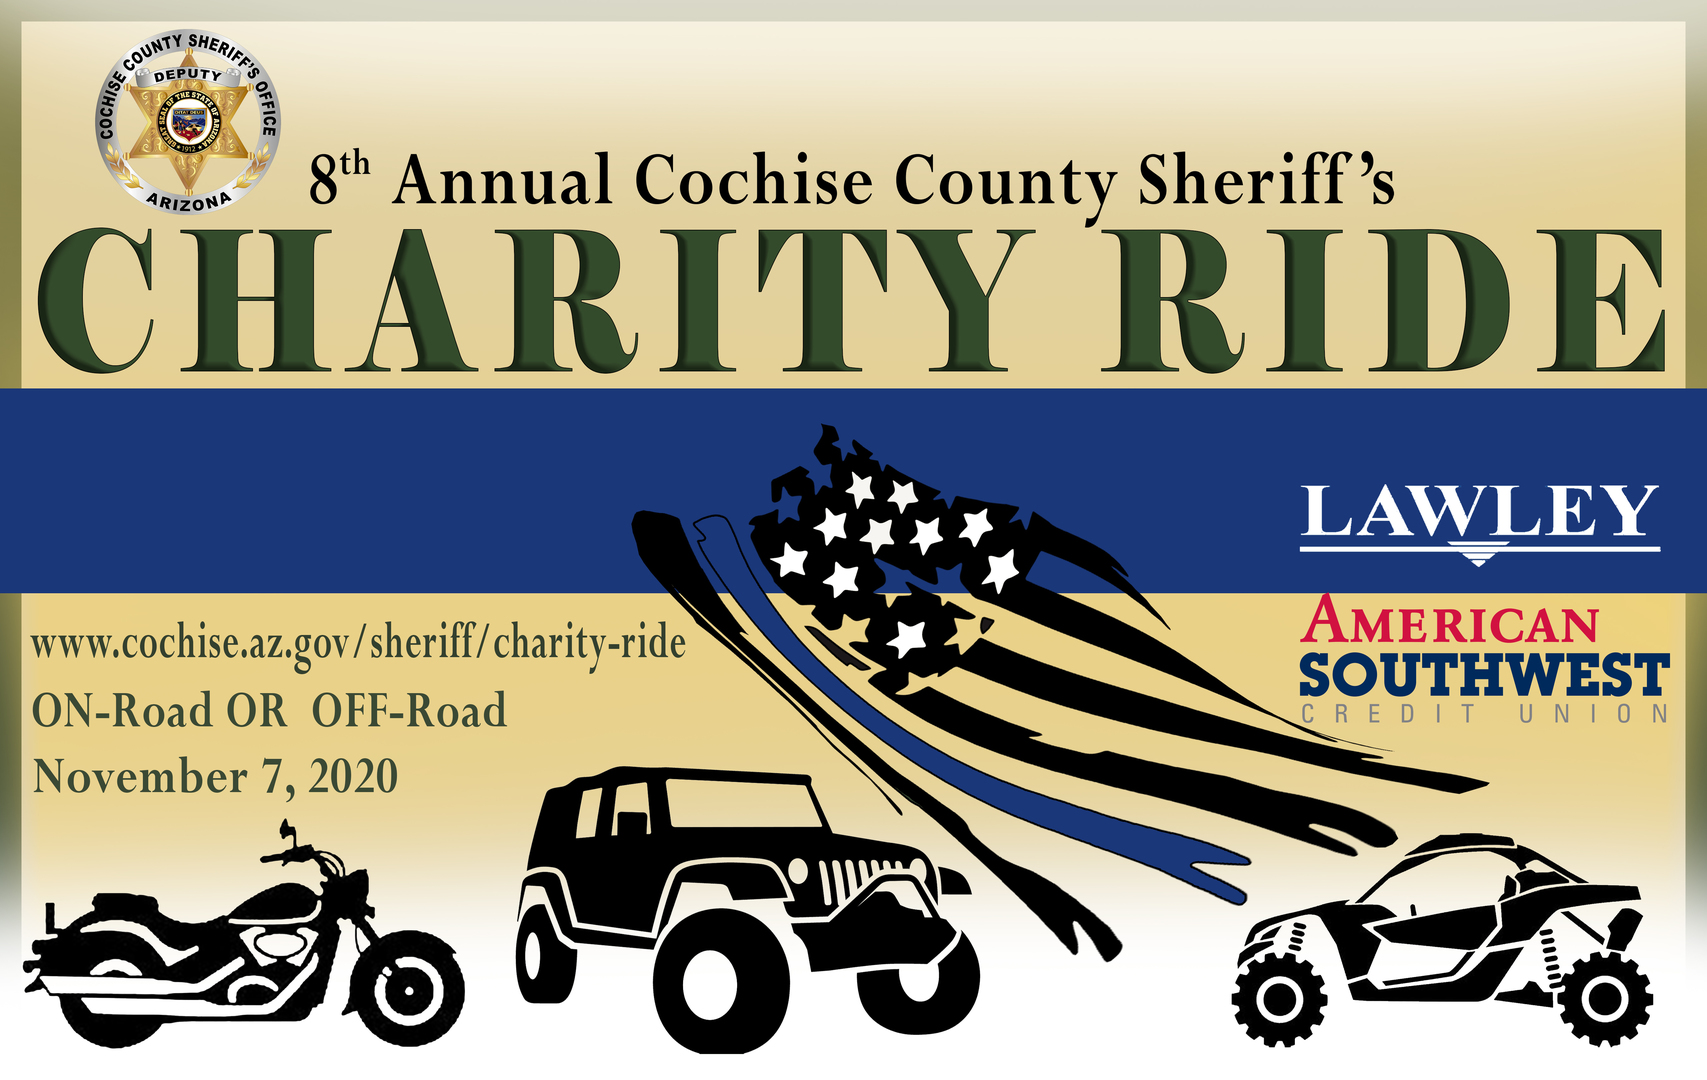 8th Annual Cochise County Sheriff's Charity Ride, Sierra Vista, Arizona, United States